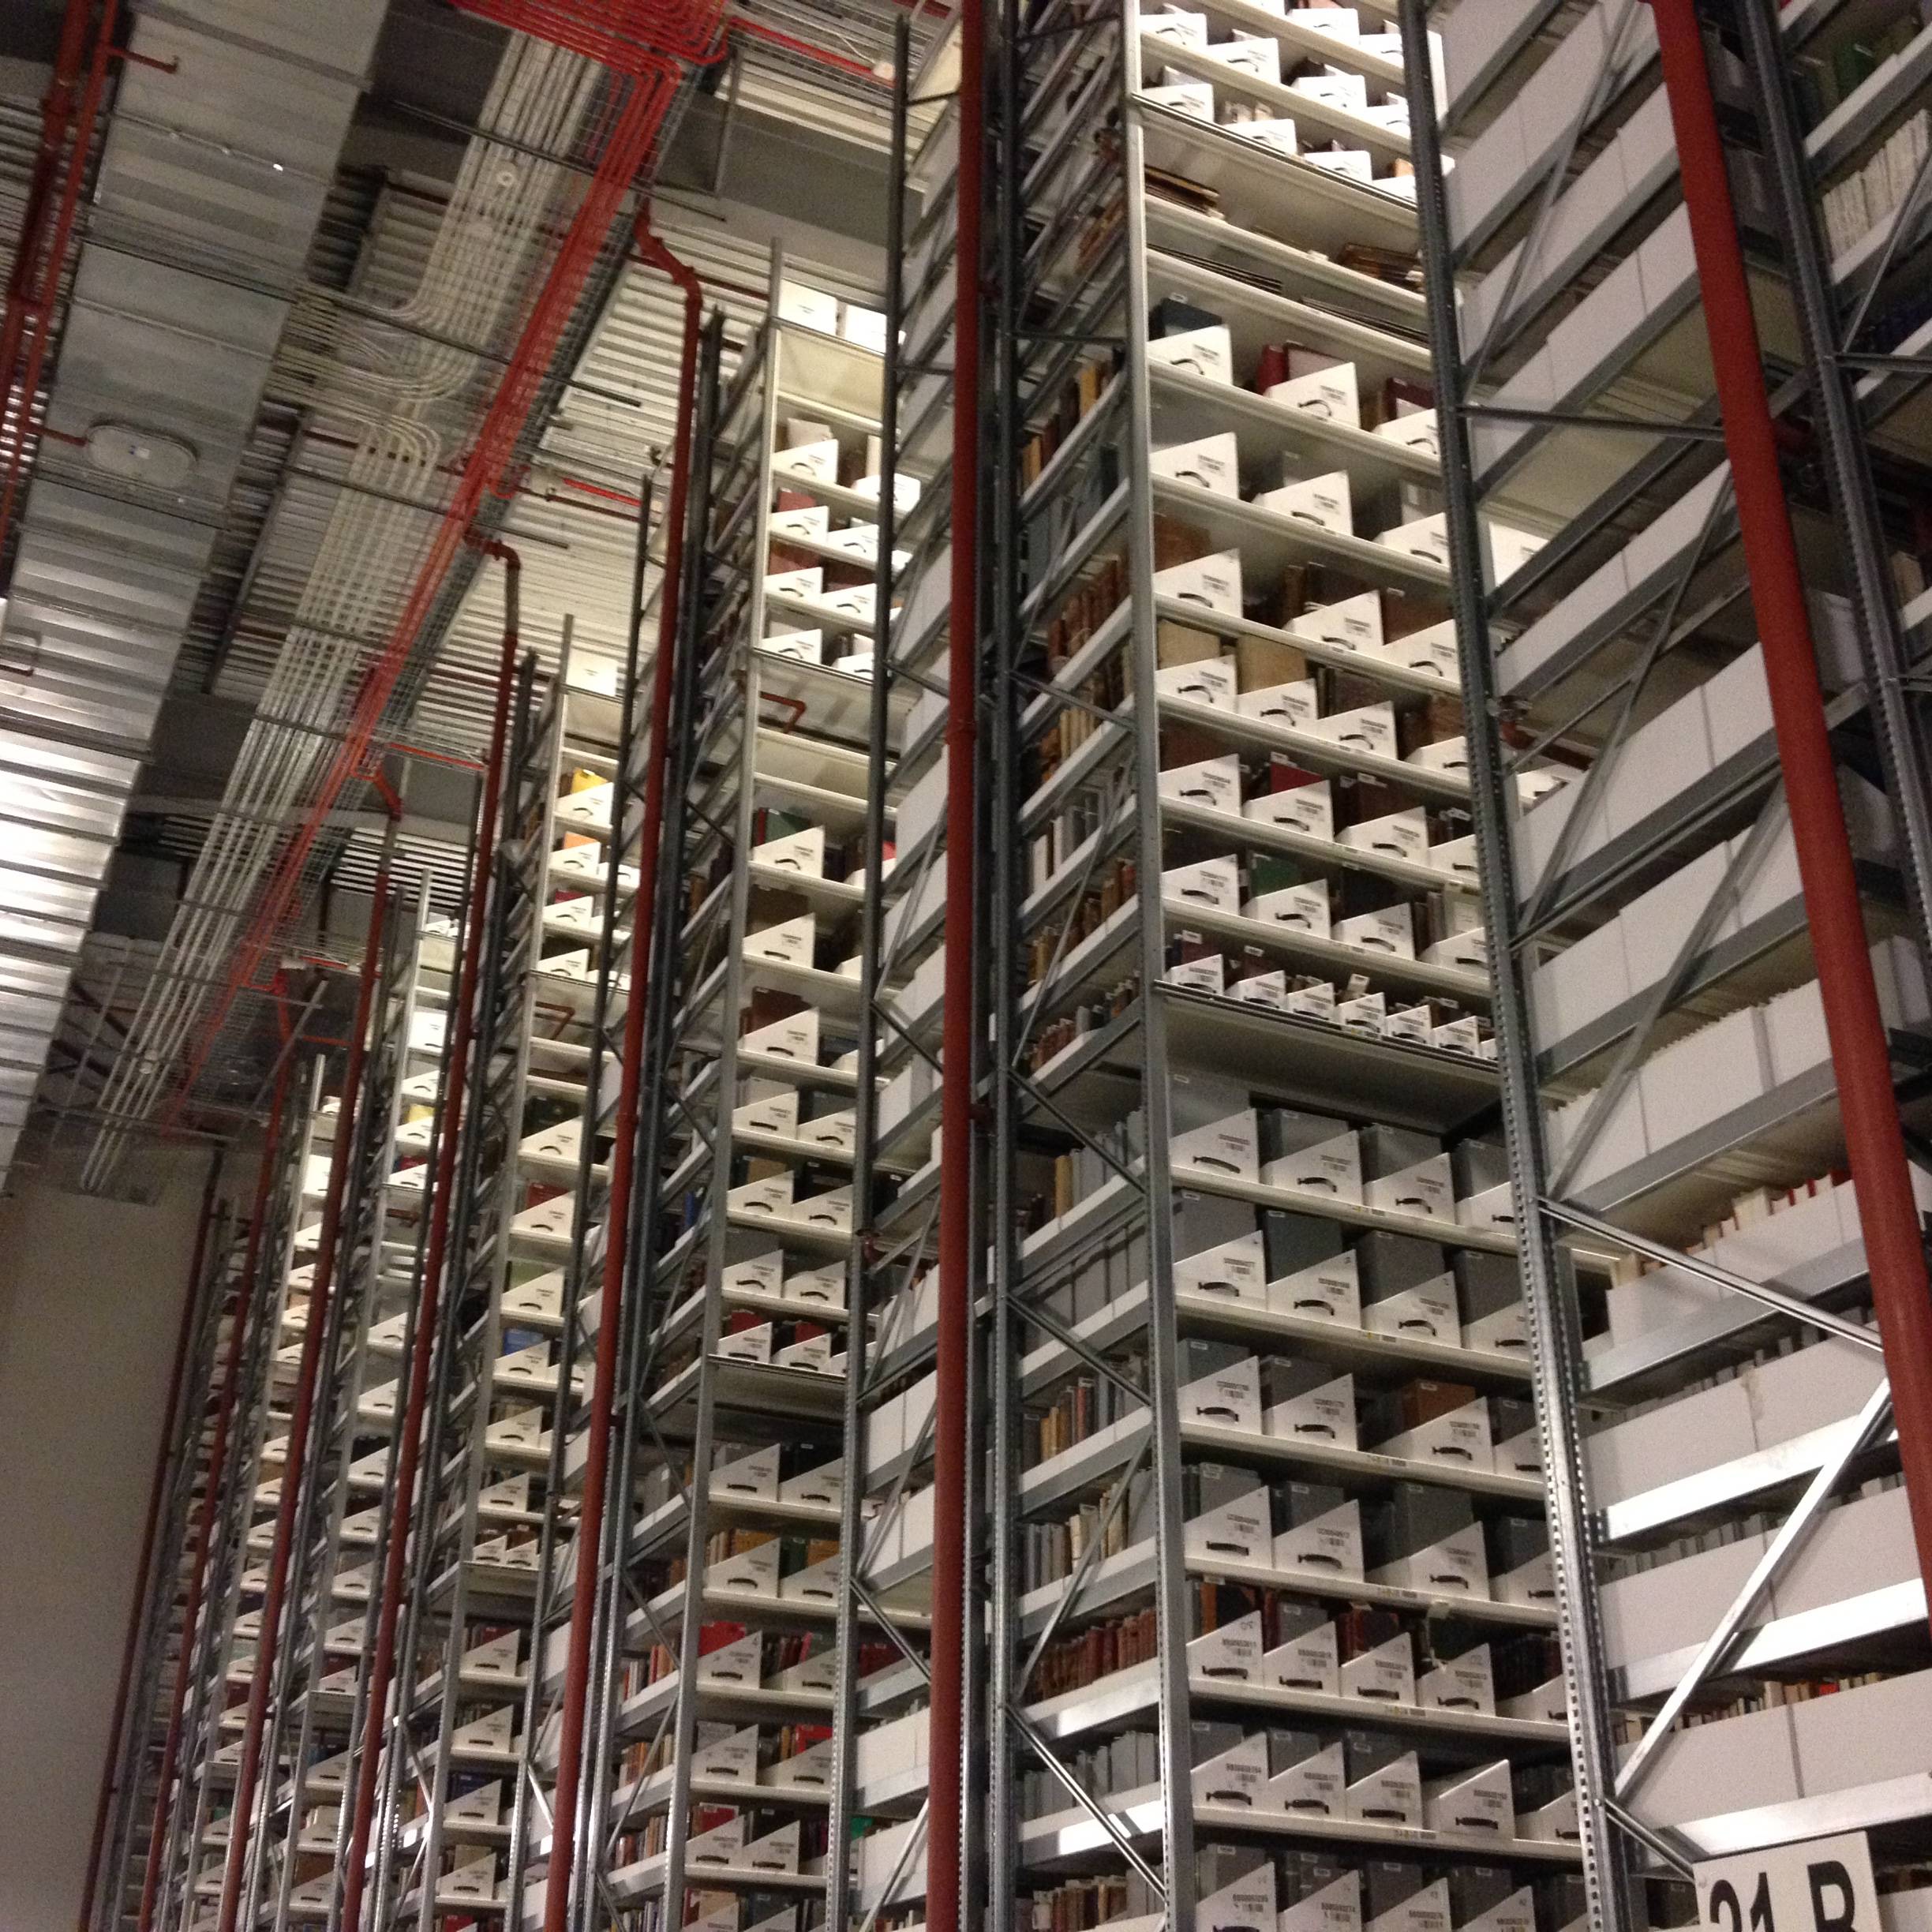 Bodleian Book Storage Facility